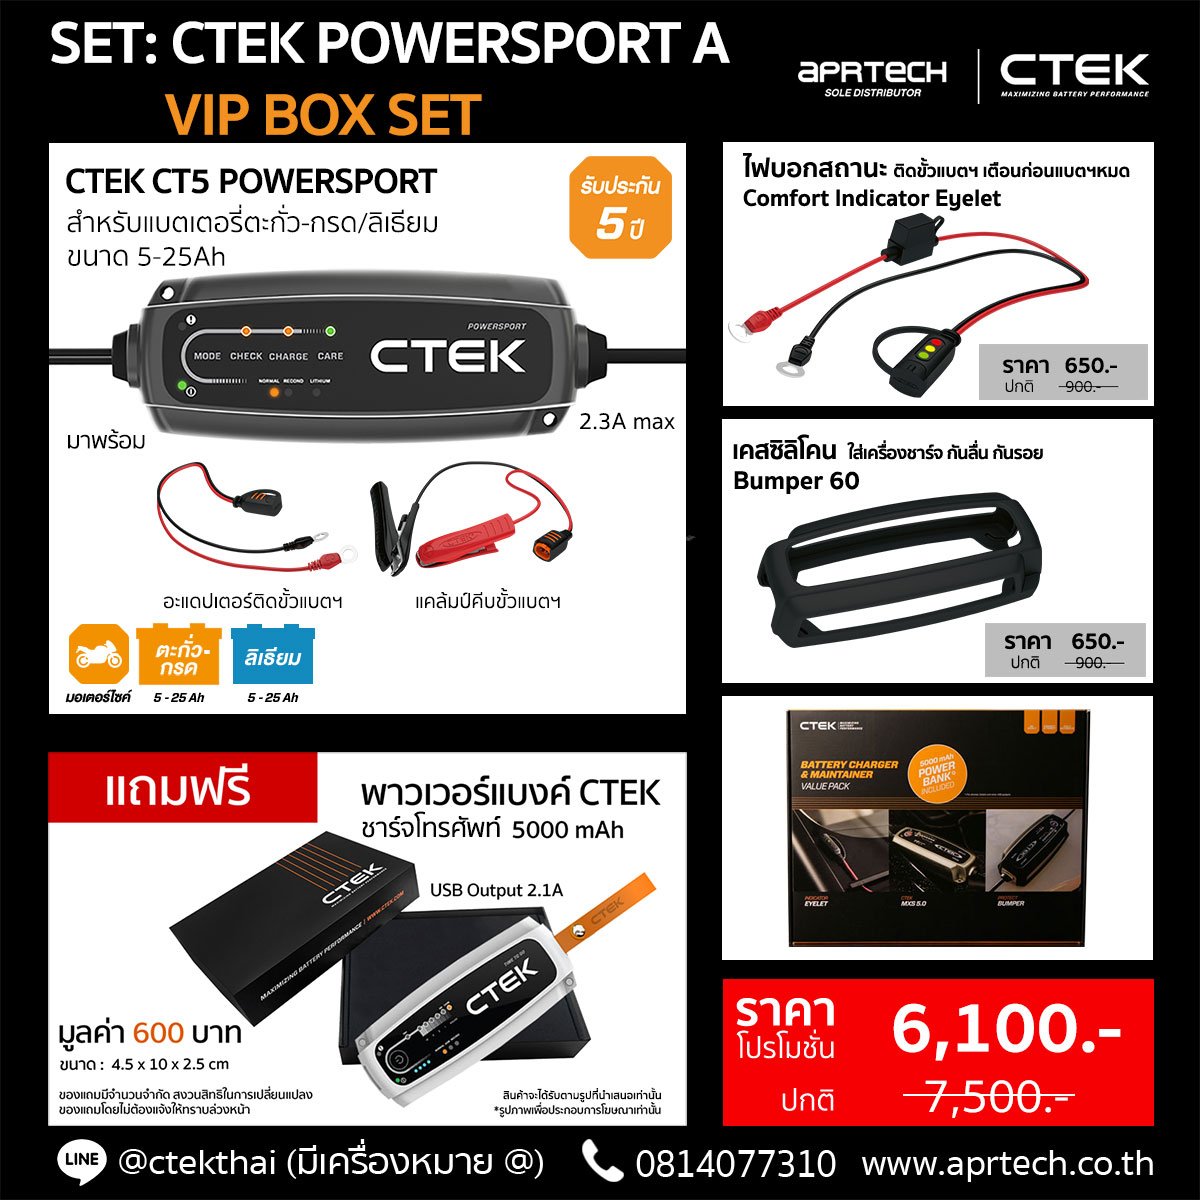 SET CTEK POWERSPORT A VIP BOX SET (CTEK POWERSPORT + Indicator Eyelet + Bumper)